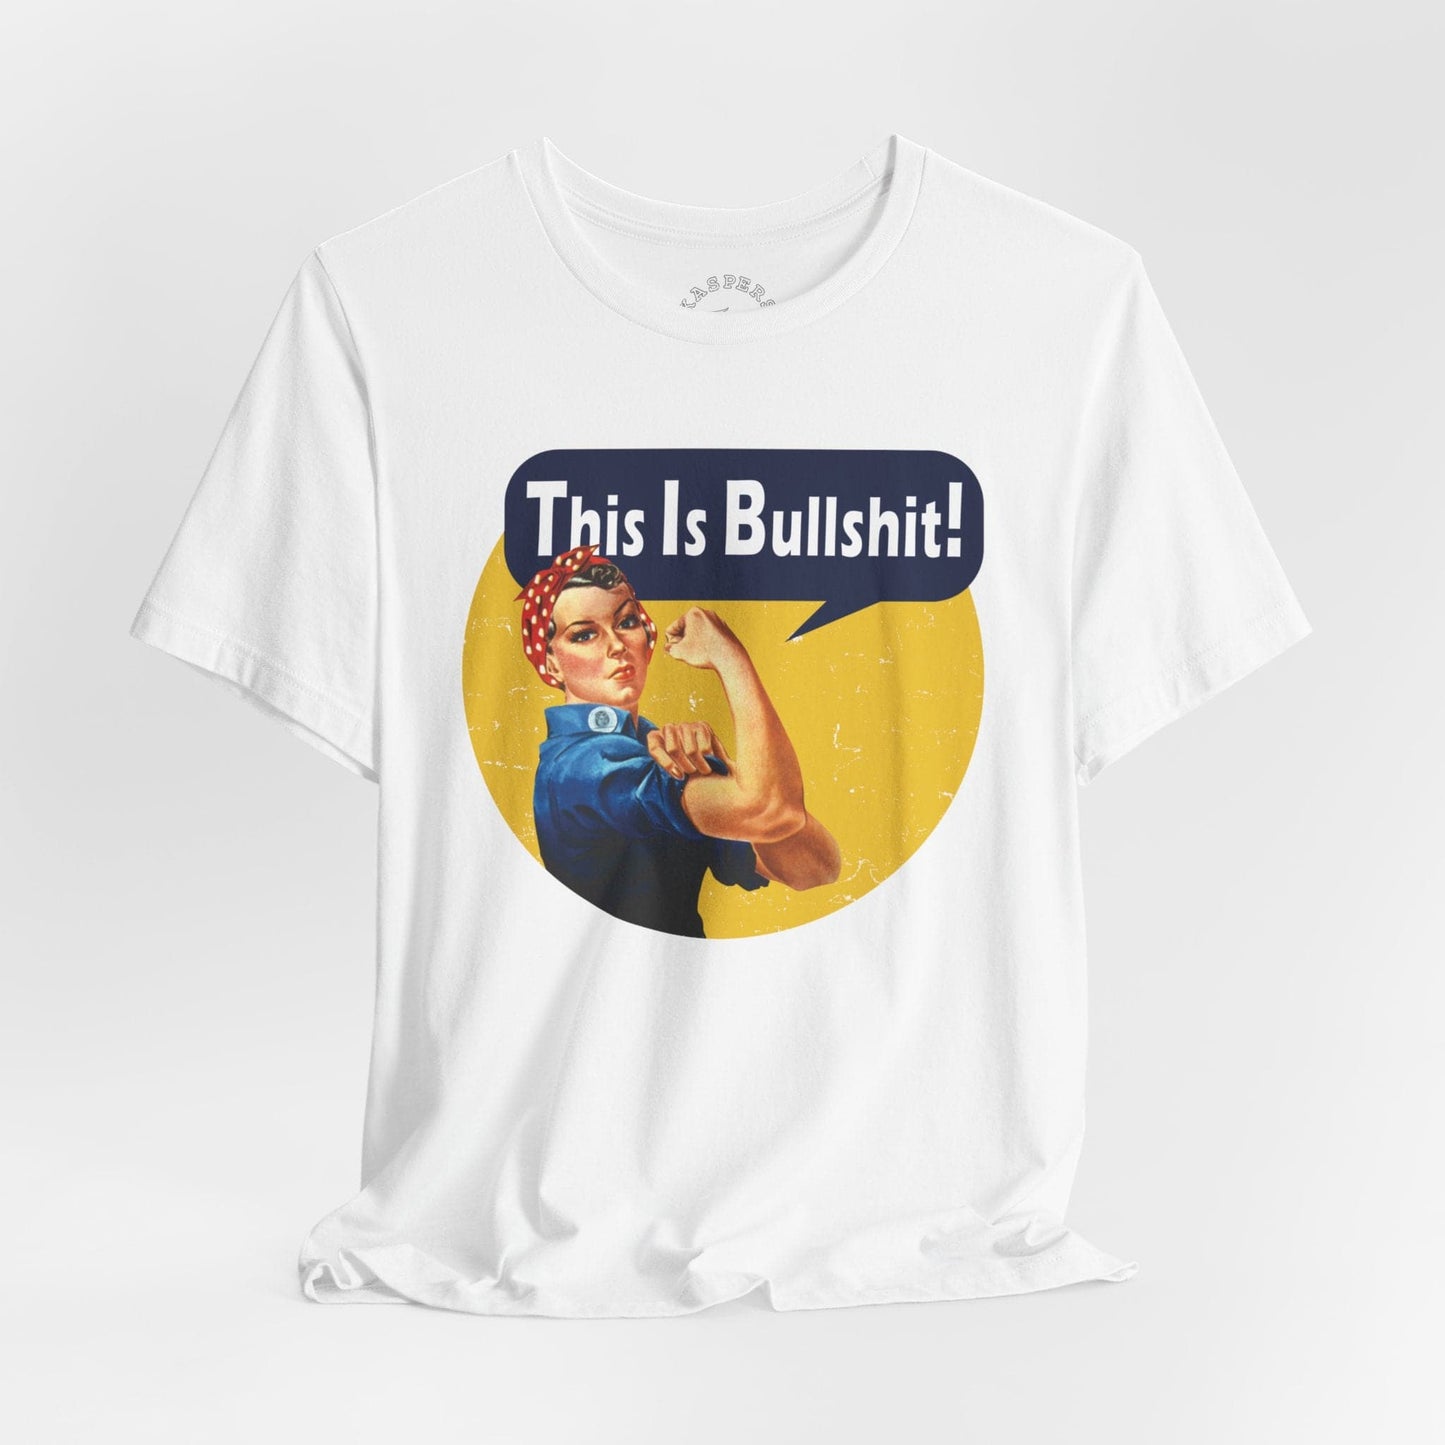 This is Bullshit! T-Shirt